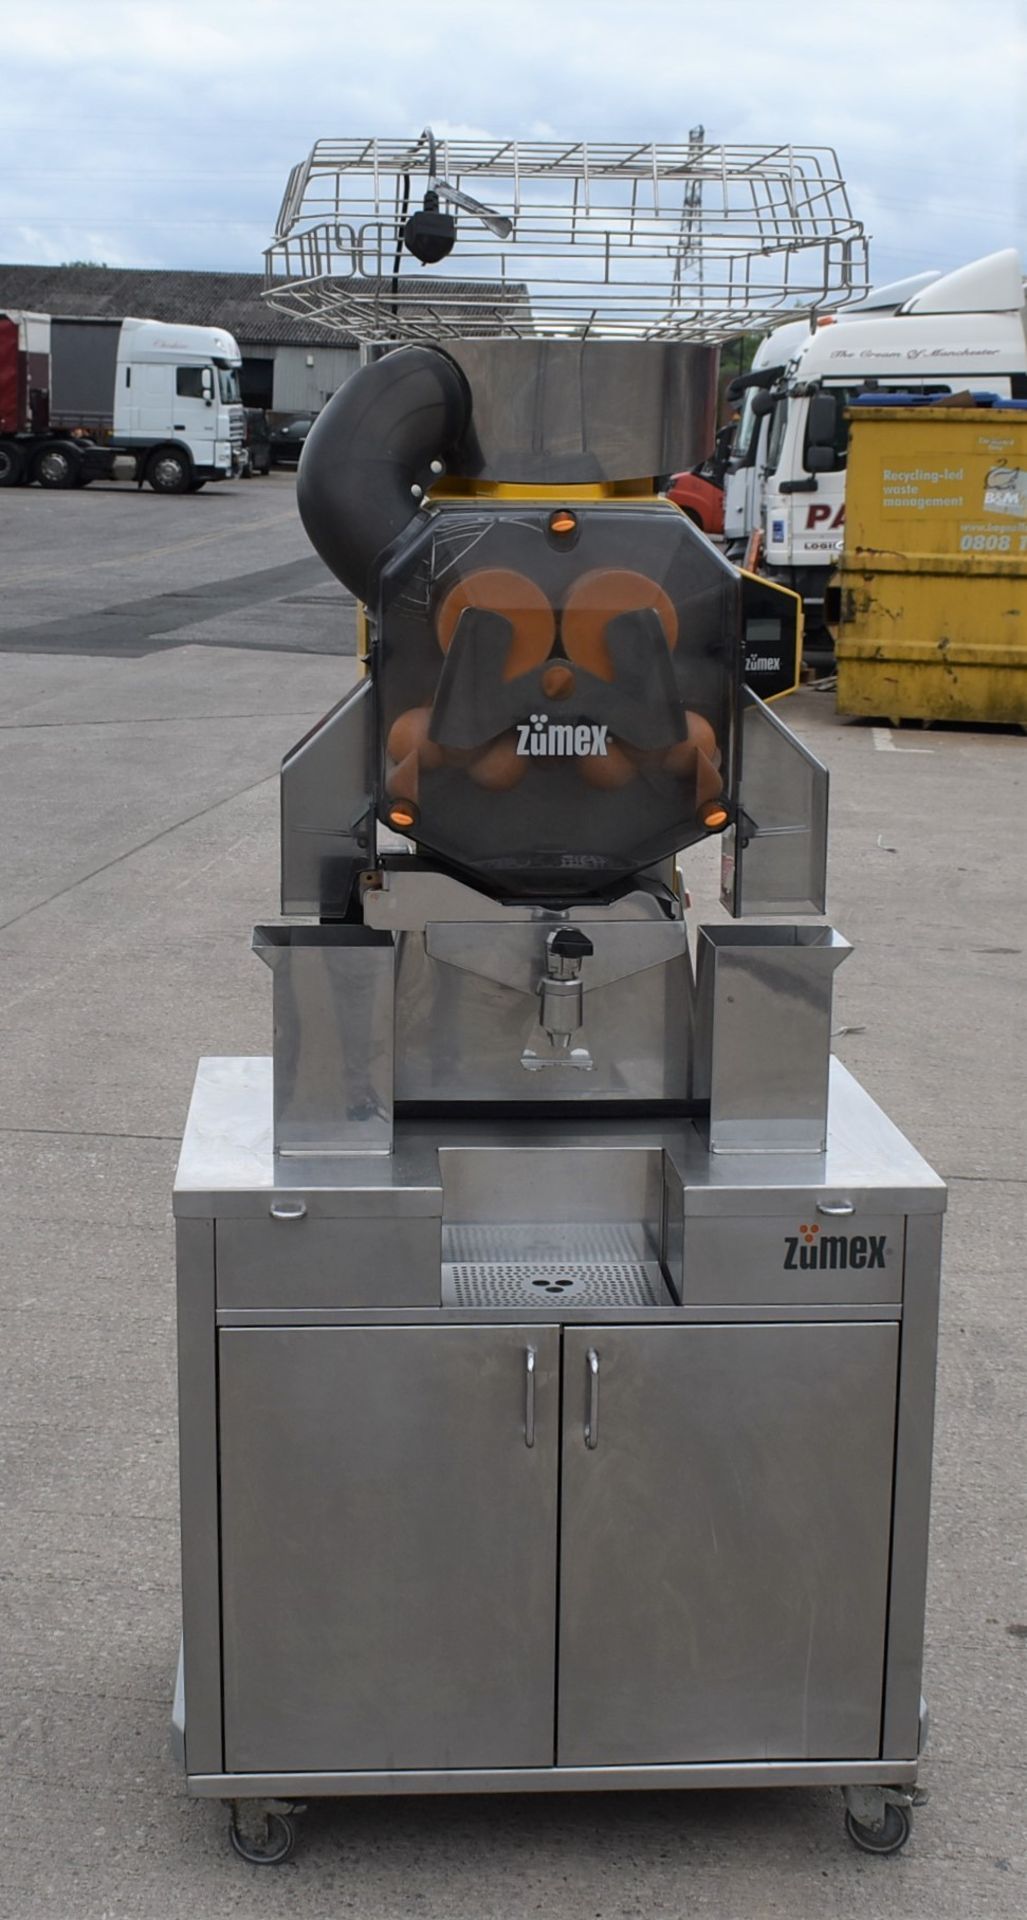 1 x Zumex Speed S +Plus Self-Service Podium Commercial Citrus Juicer - Manufactured in 2018 - - Image 3 of 6